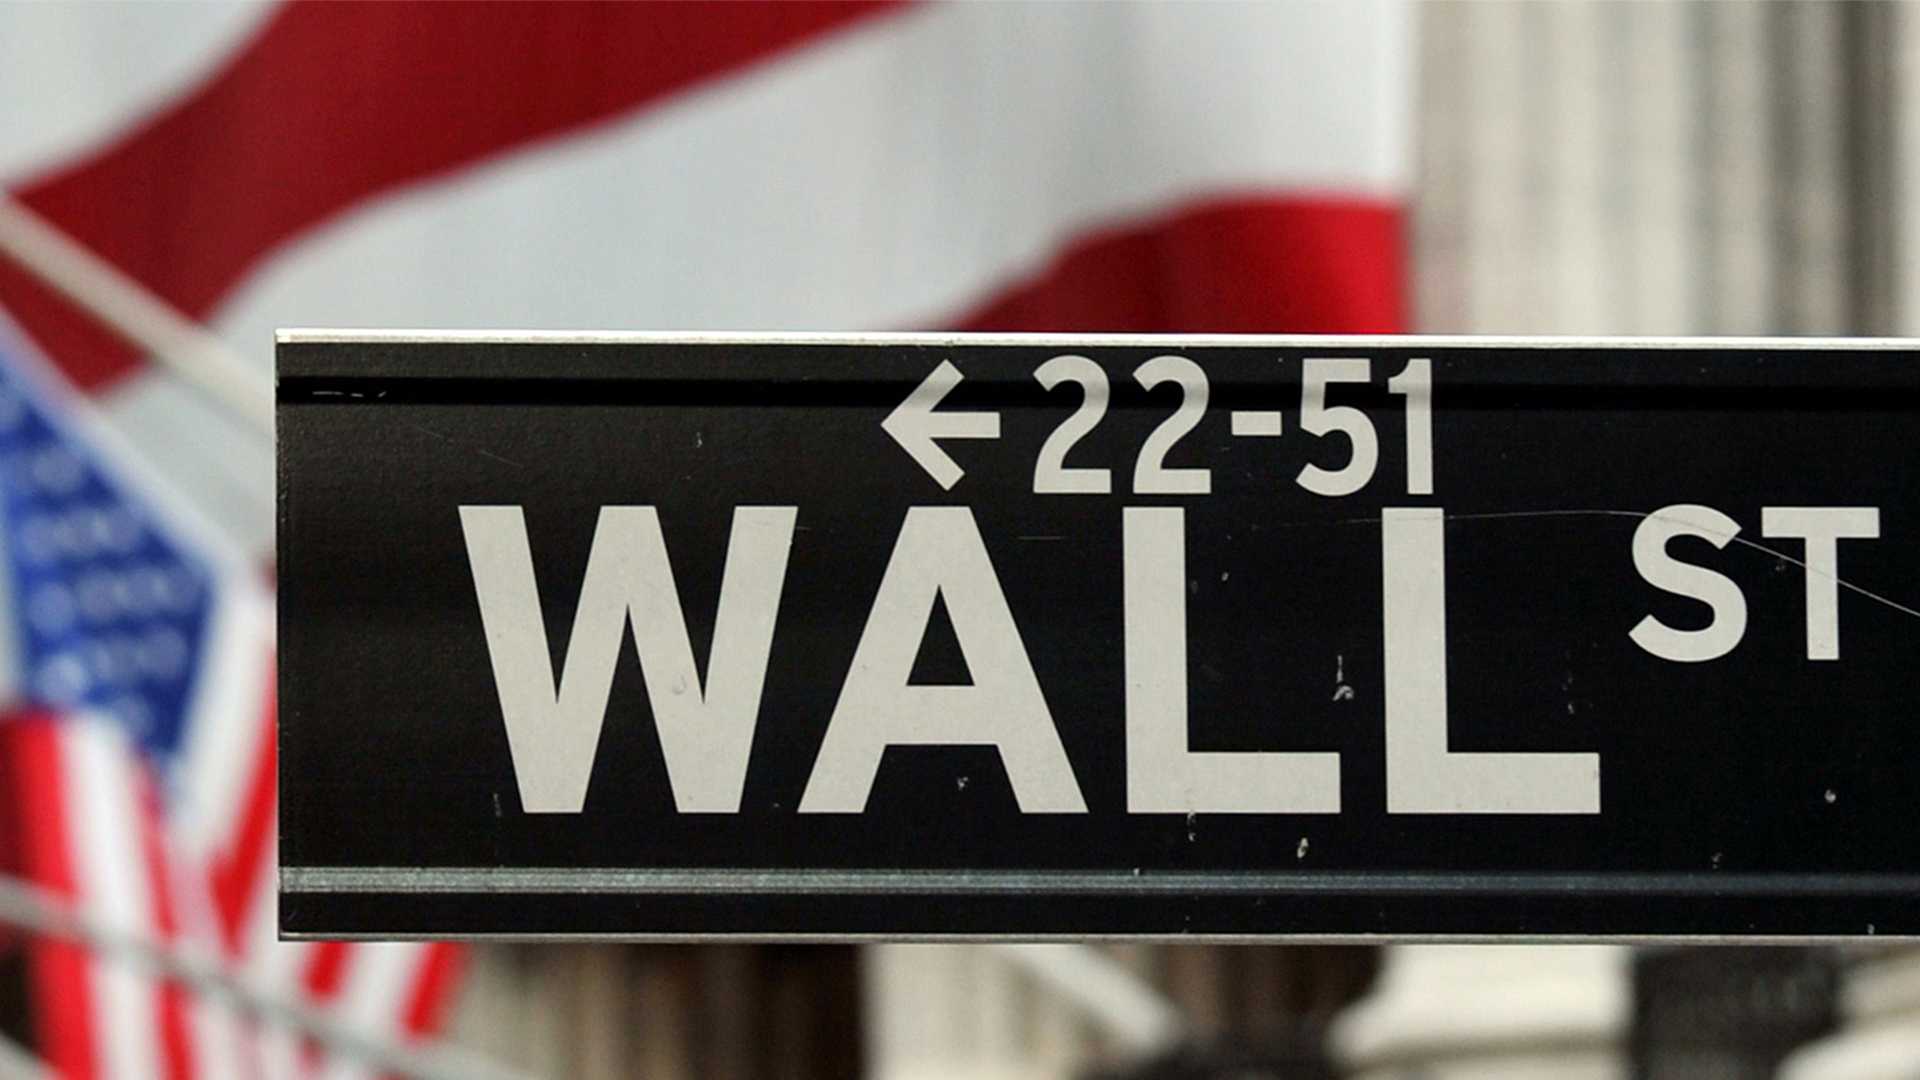 Wall Street Background Wallst Jpg